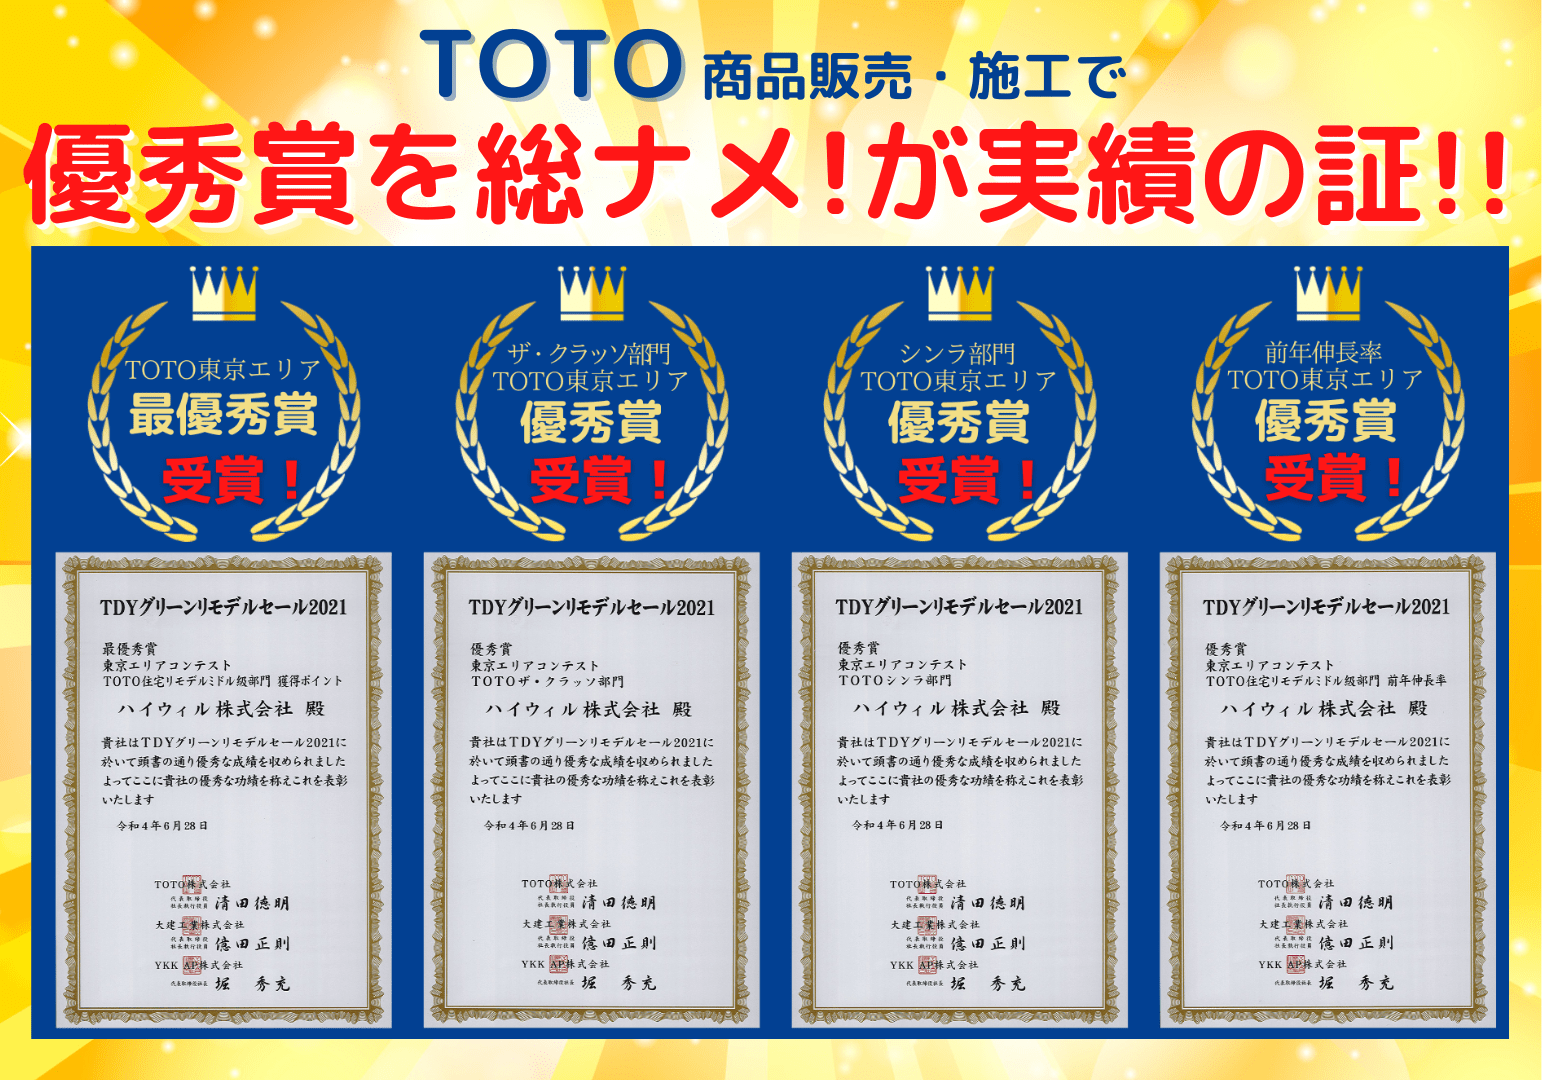 TOTO東京エリアコンテストで最優秀賞を受賞しました！